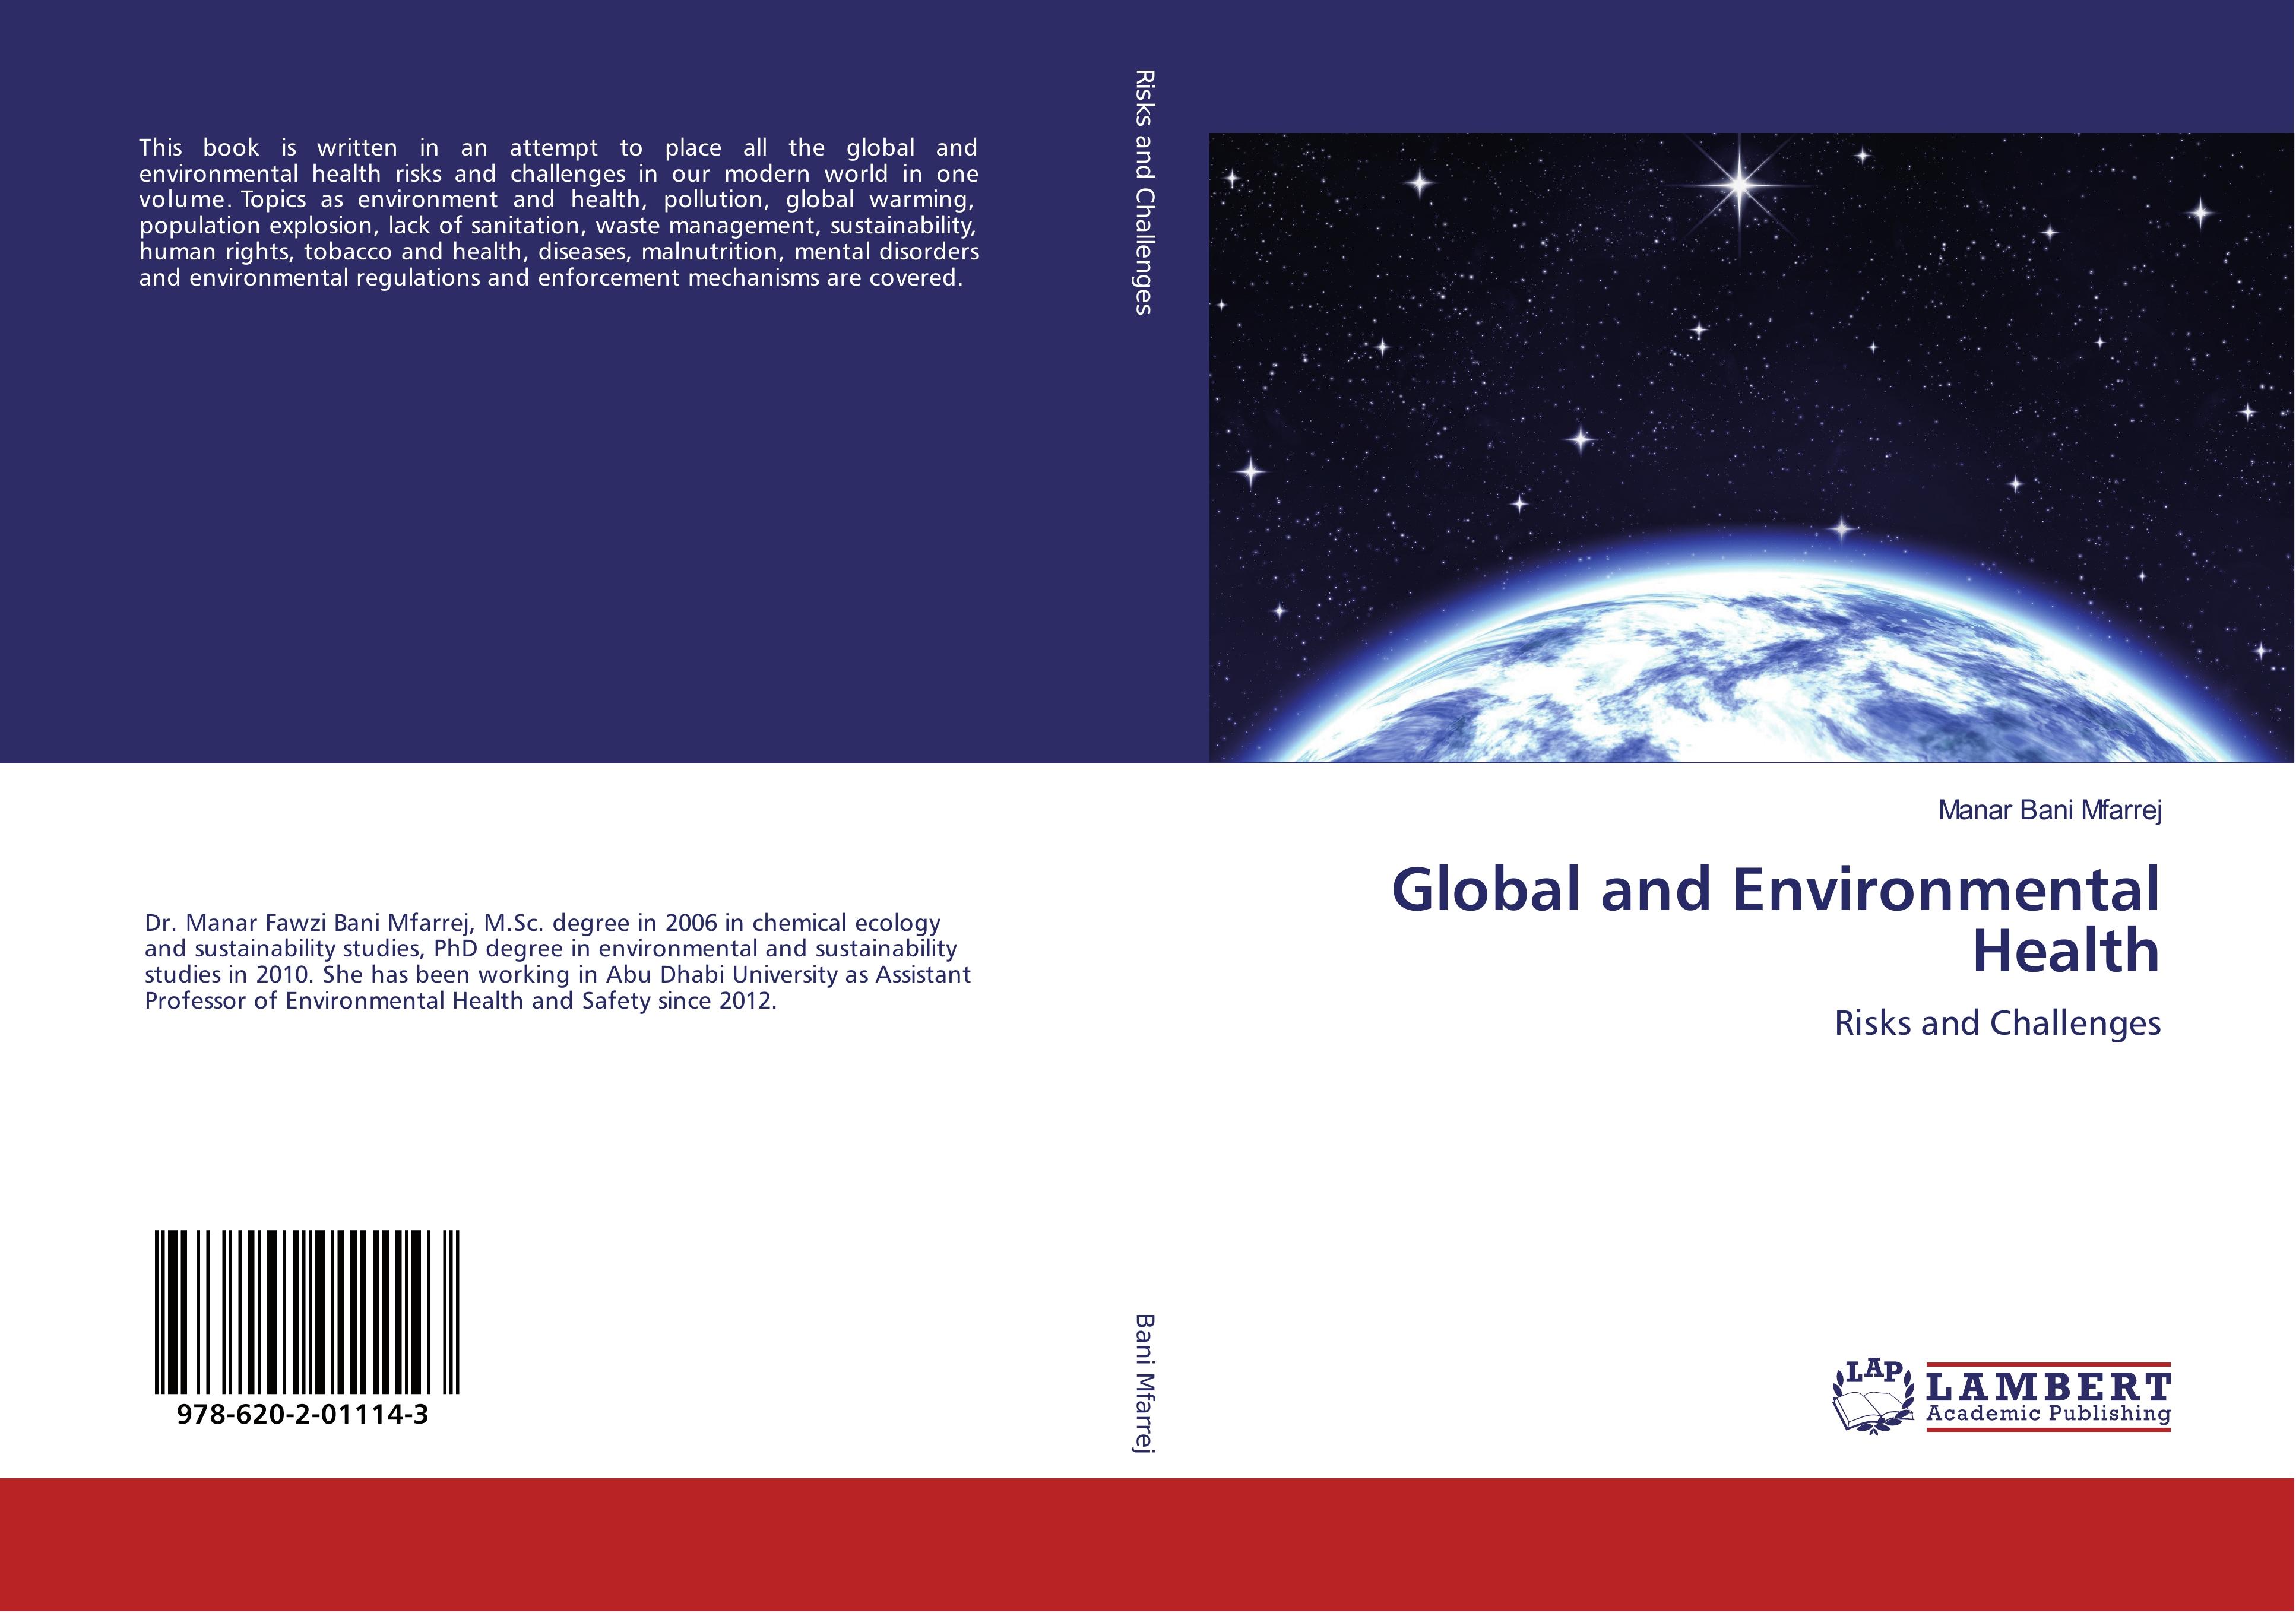 Global and Environmental Health - Manar Bani Mfarrej